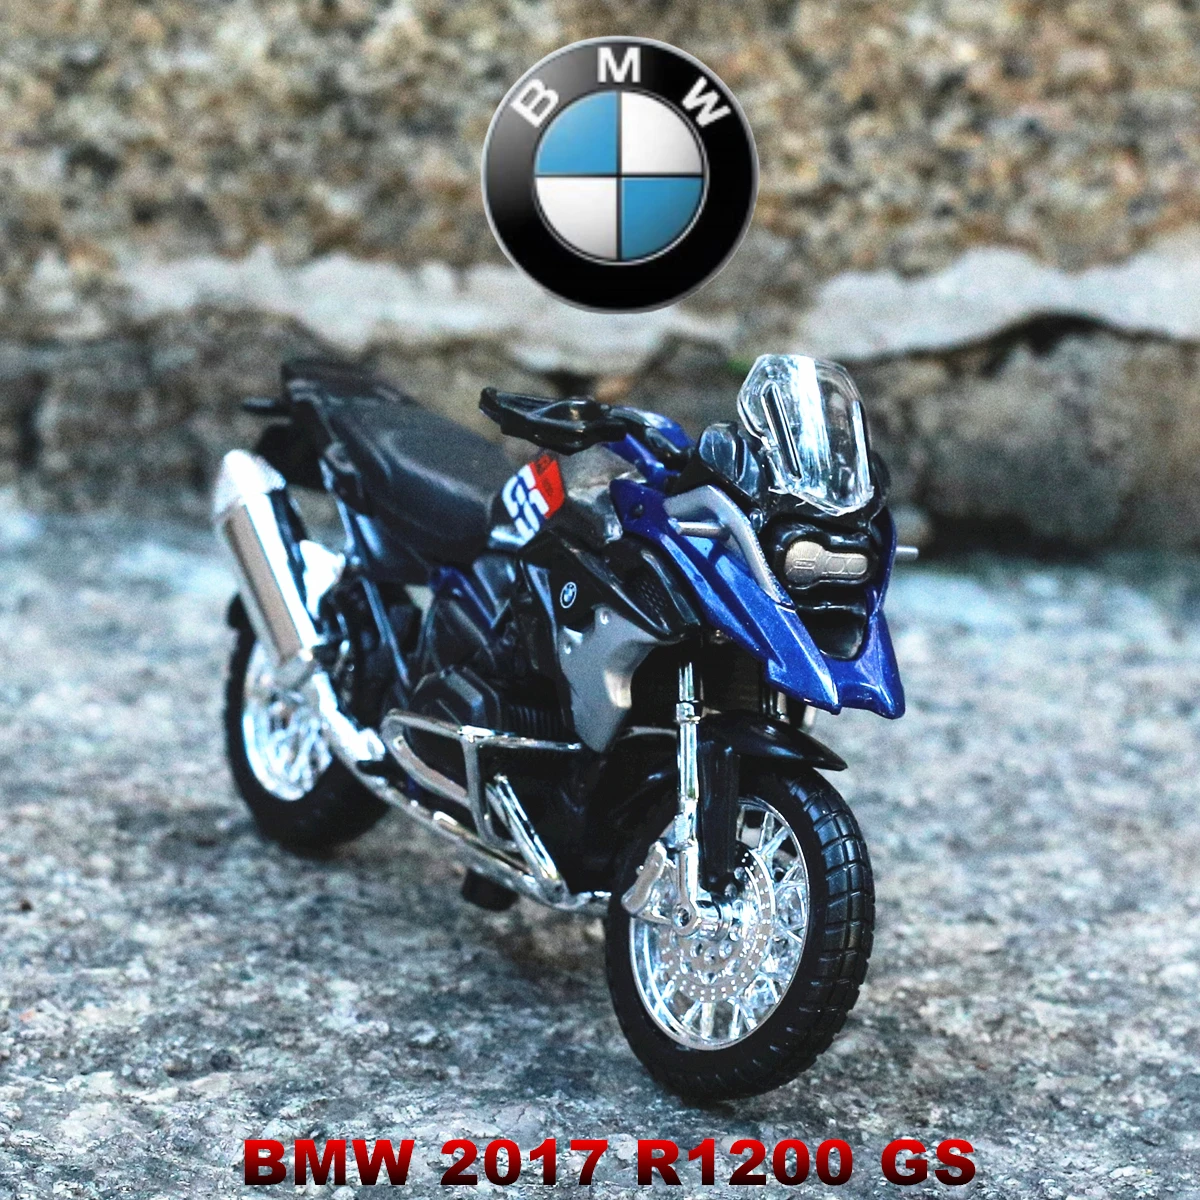 

Maisto 1:18 BMW 2017 R1200 GS Motogp Motorcycle Model Souvenir Toy Collectible Mini Moto Diecast Metal with Plastic Parts